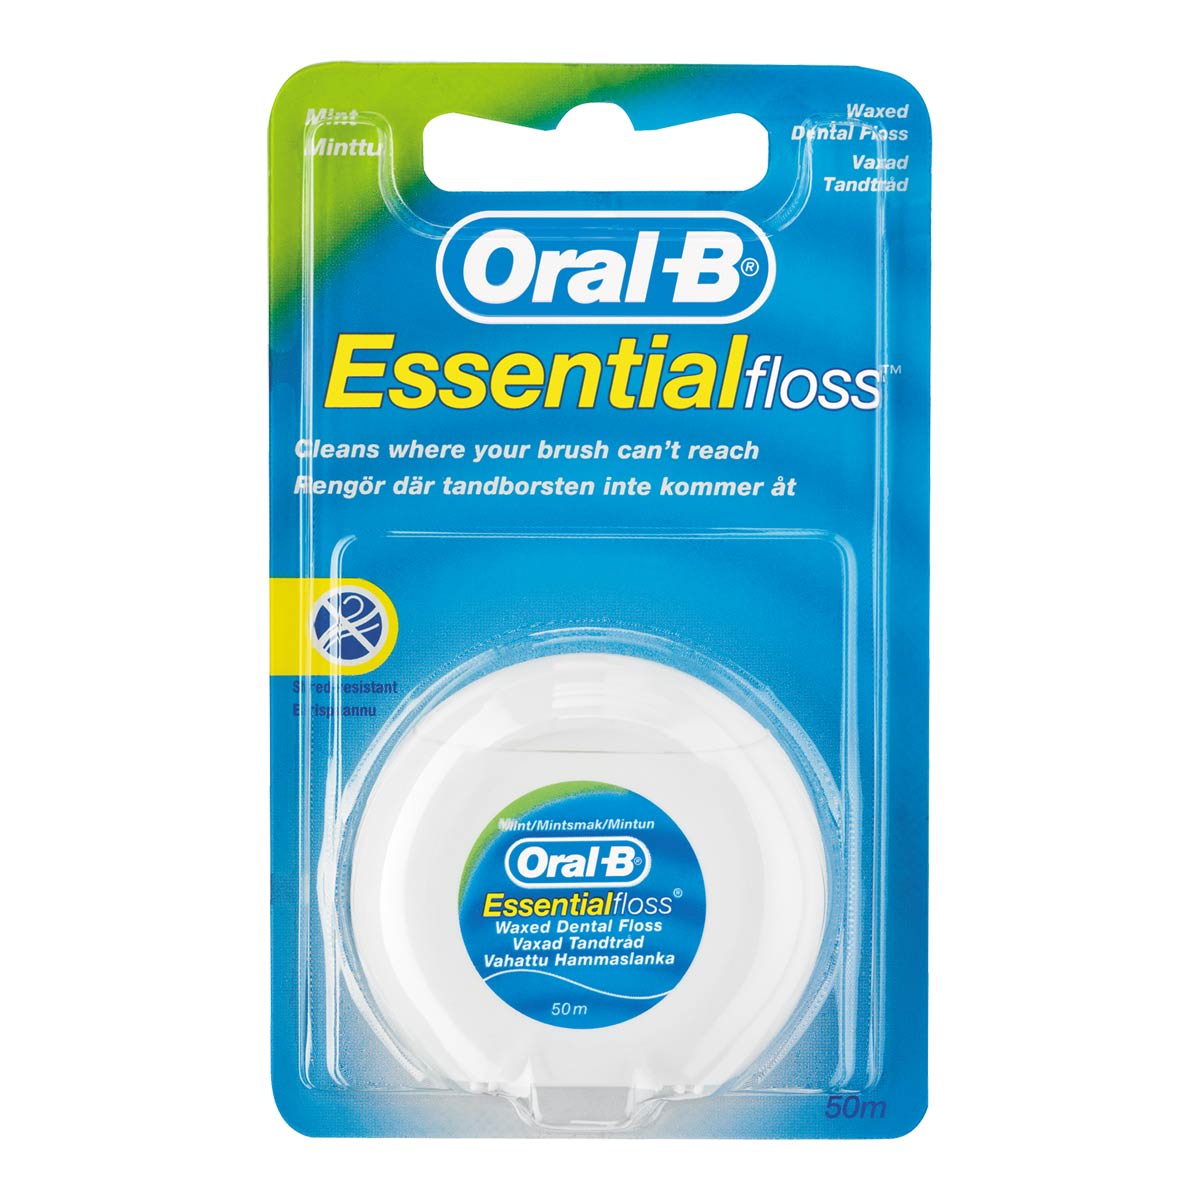 Oral-B Essential tanntråd mint undefined